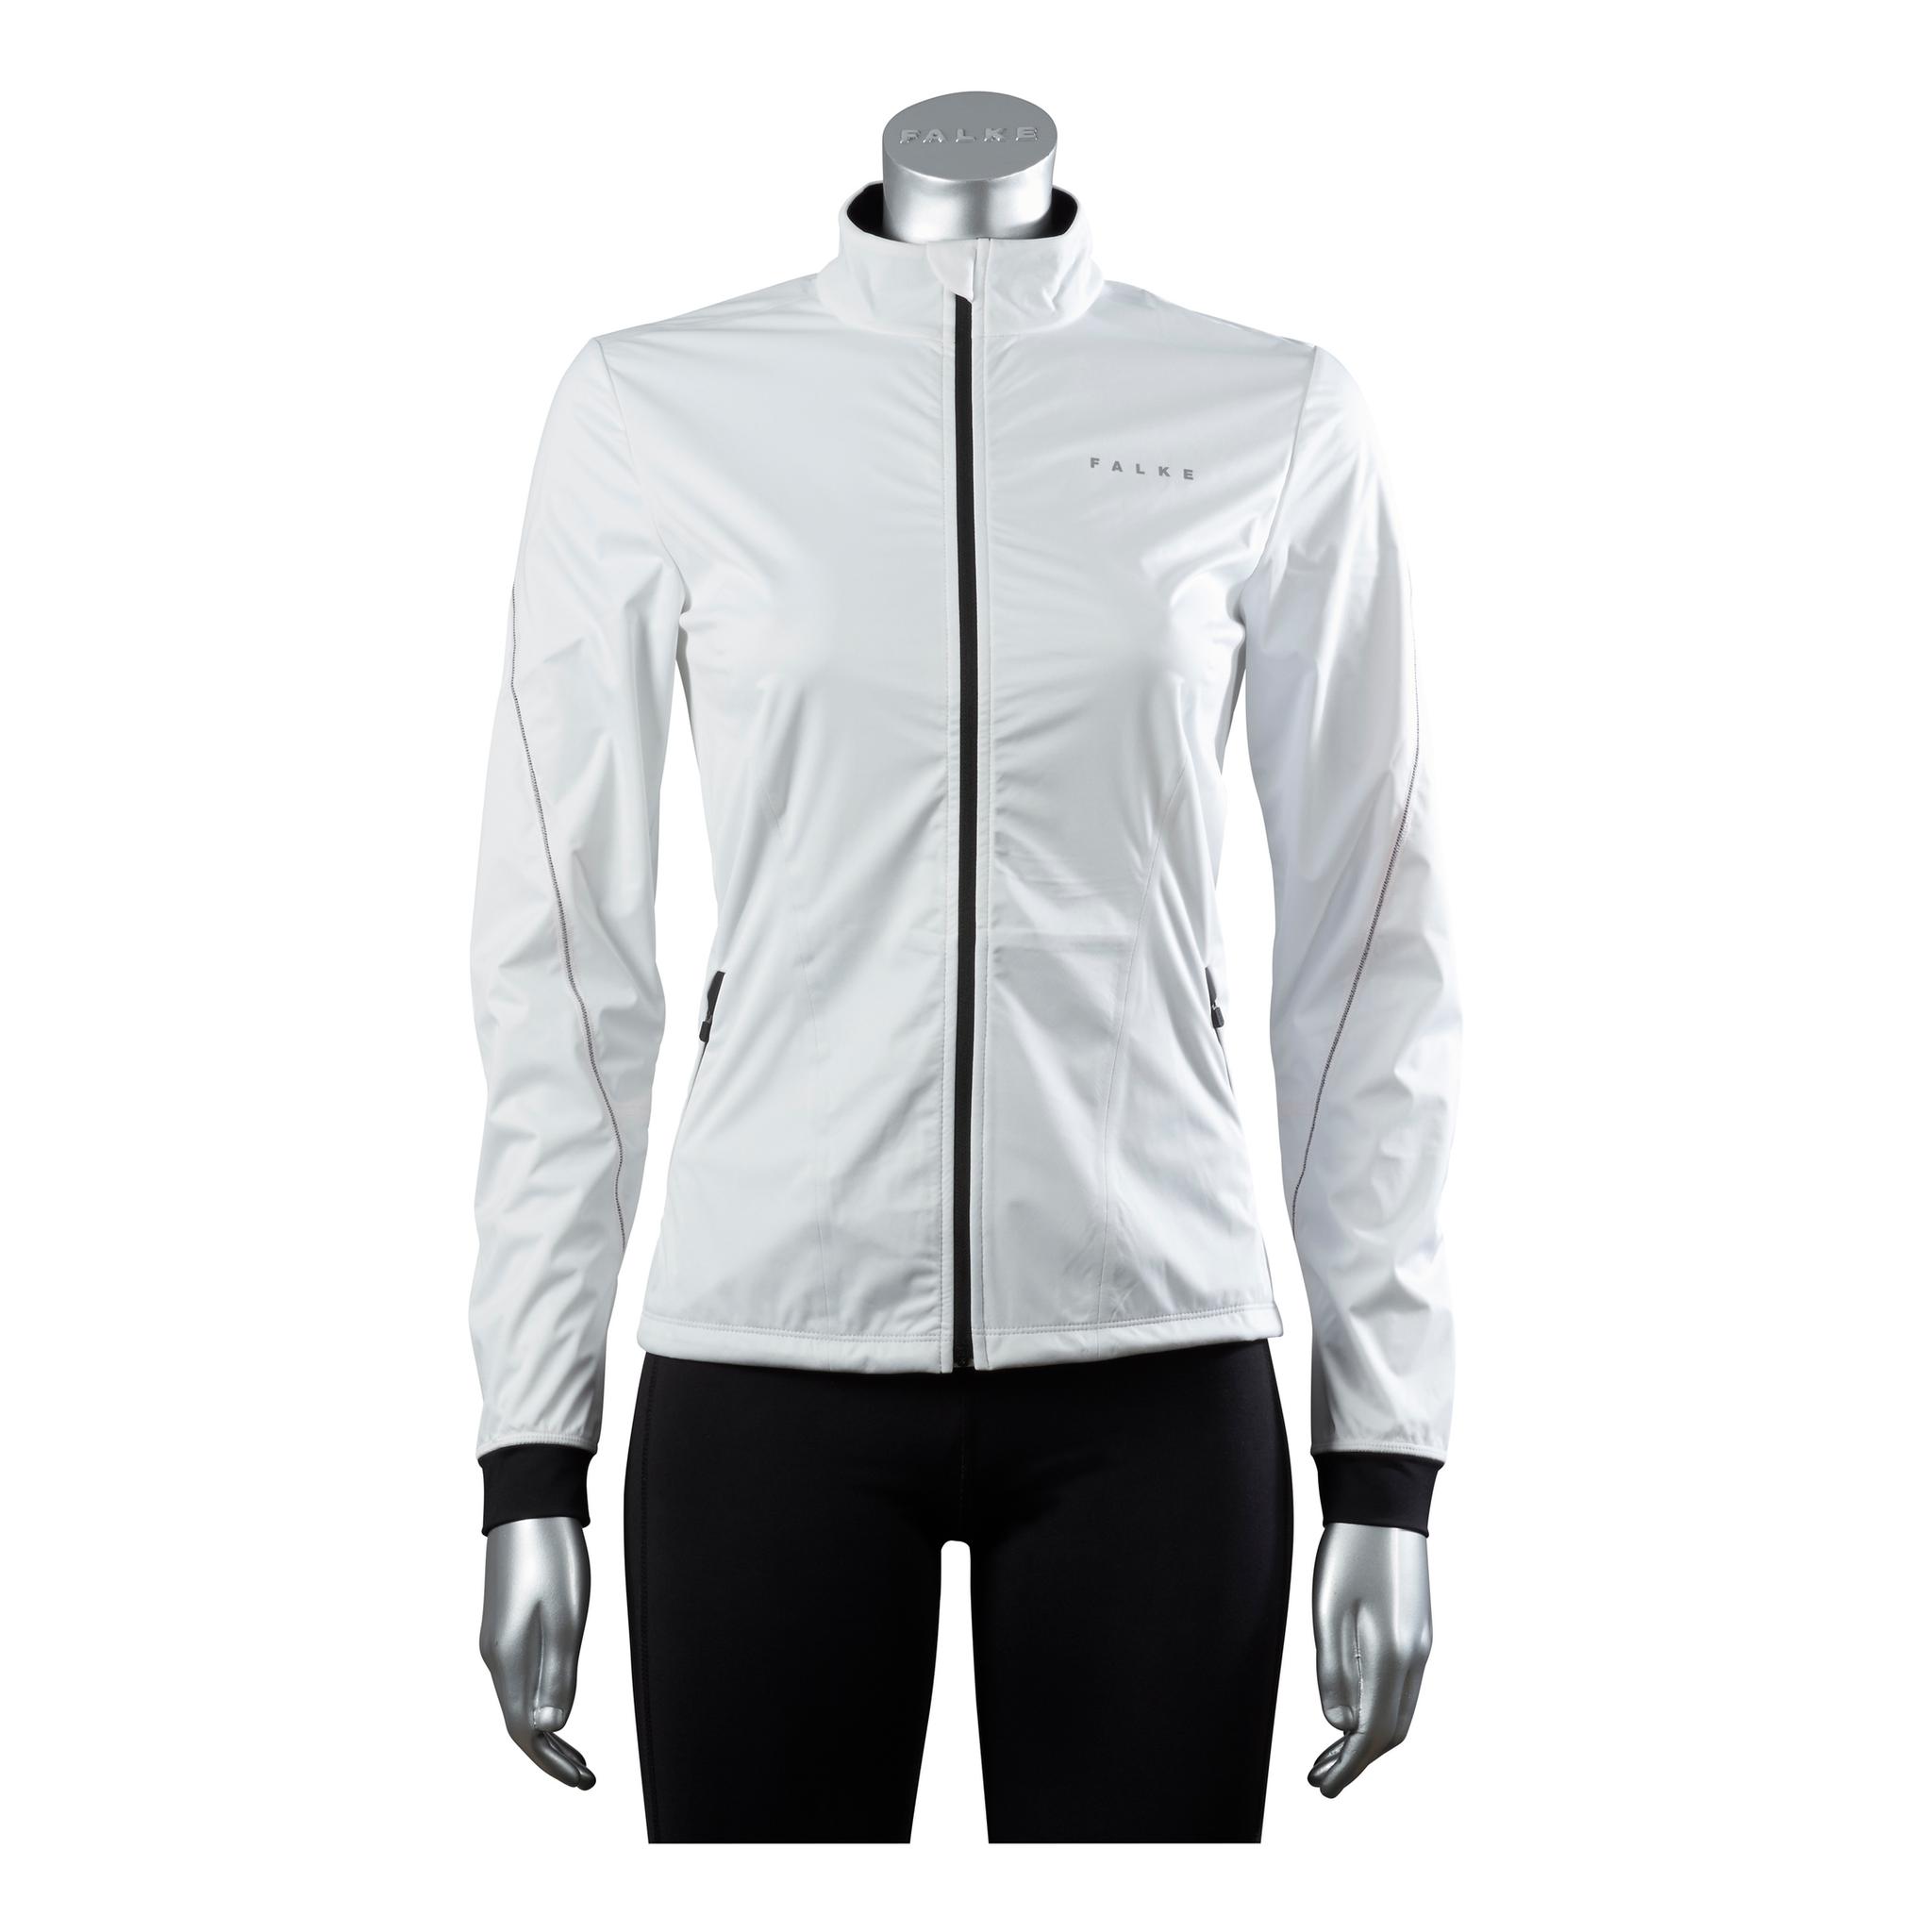 Falke Jacket Windproof Air Ventilation Blanc L 